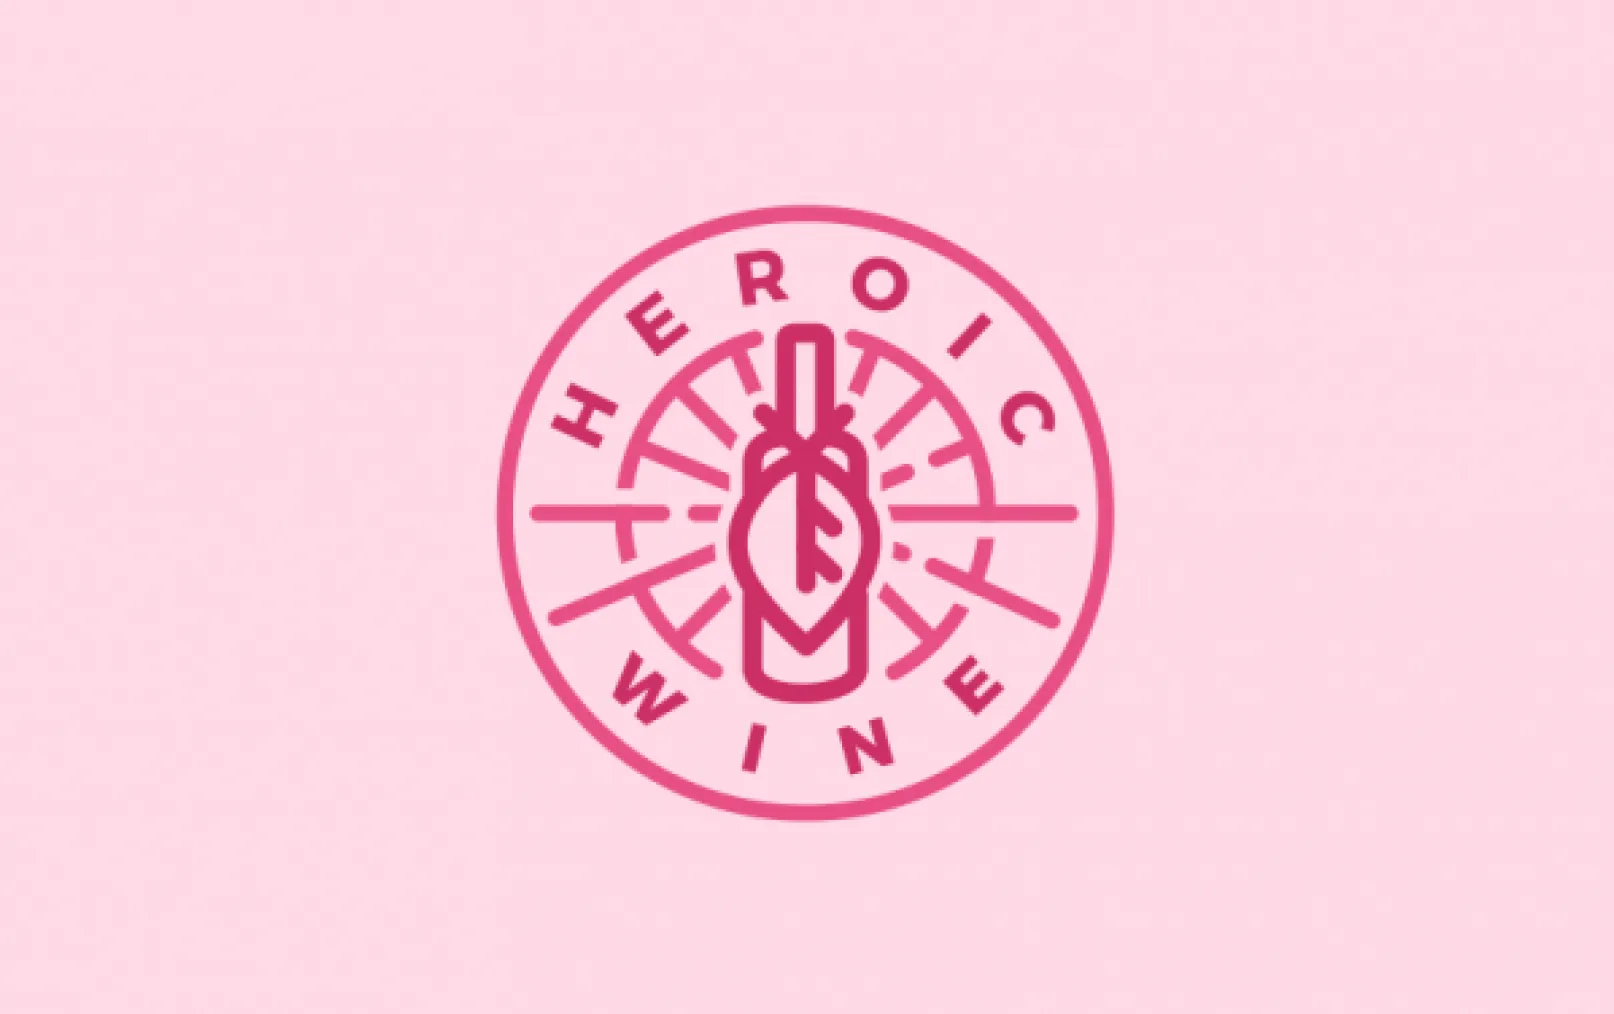 Heroic Wine logo